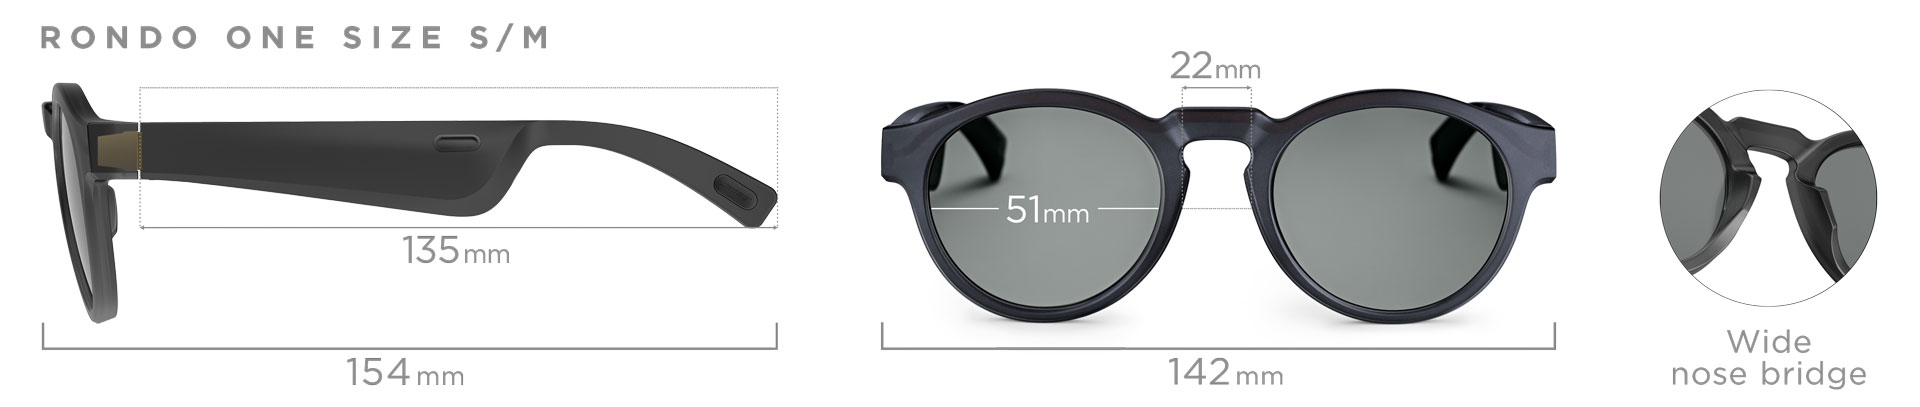 Bose Frames Rondo Audio  Bluetooth Sunglasses, Black - image 5 of 7